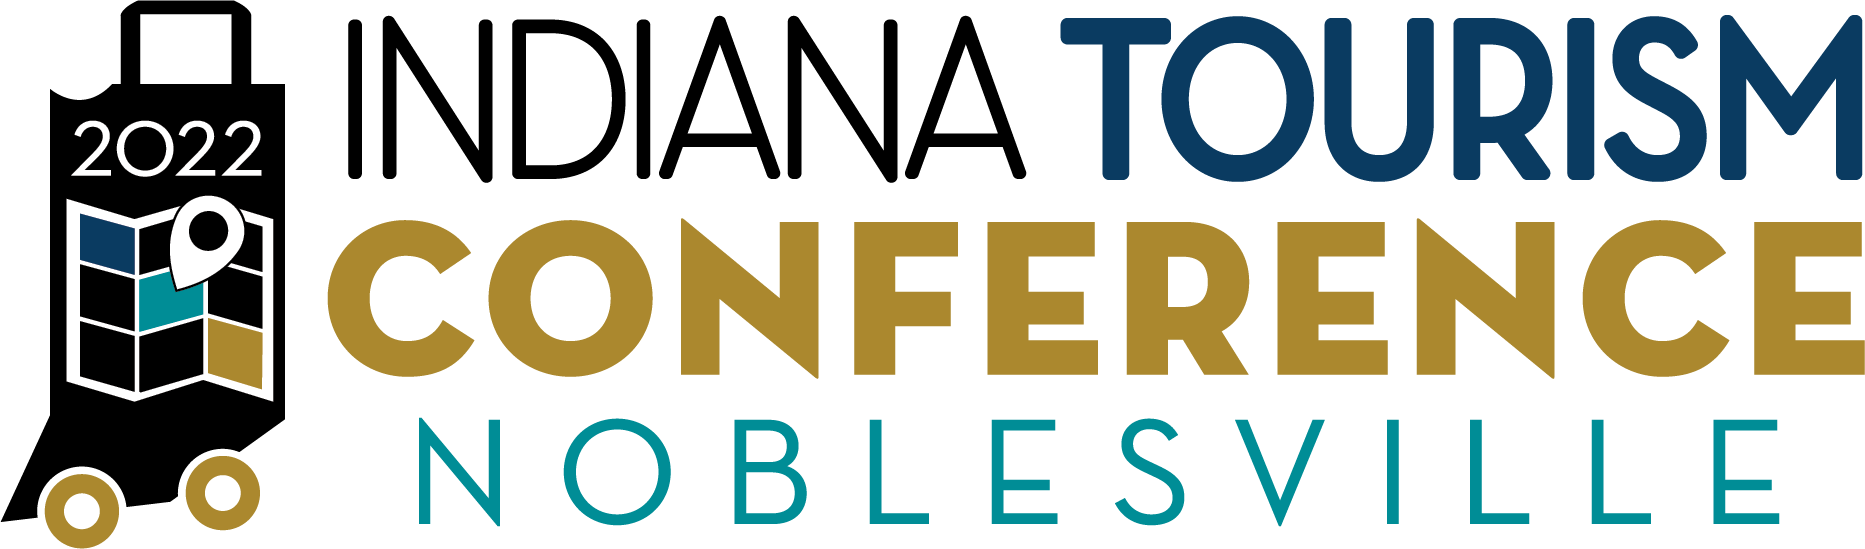 Indiana Tourism Association Conference Logo